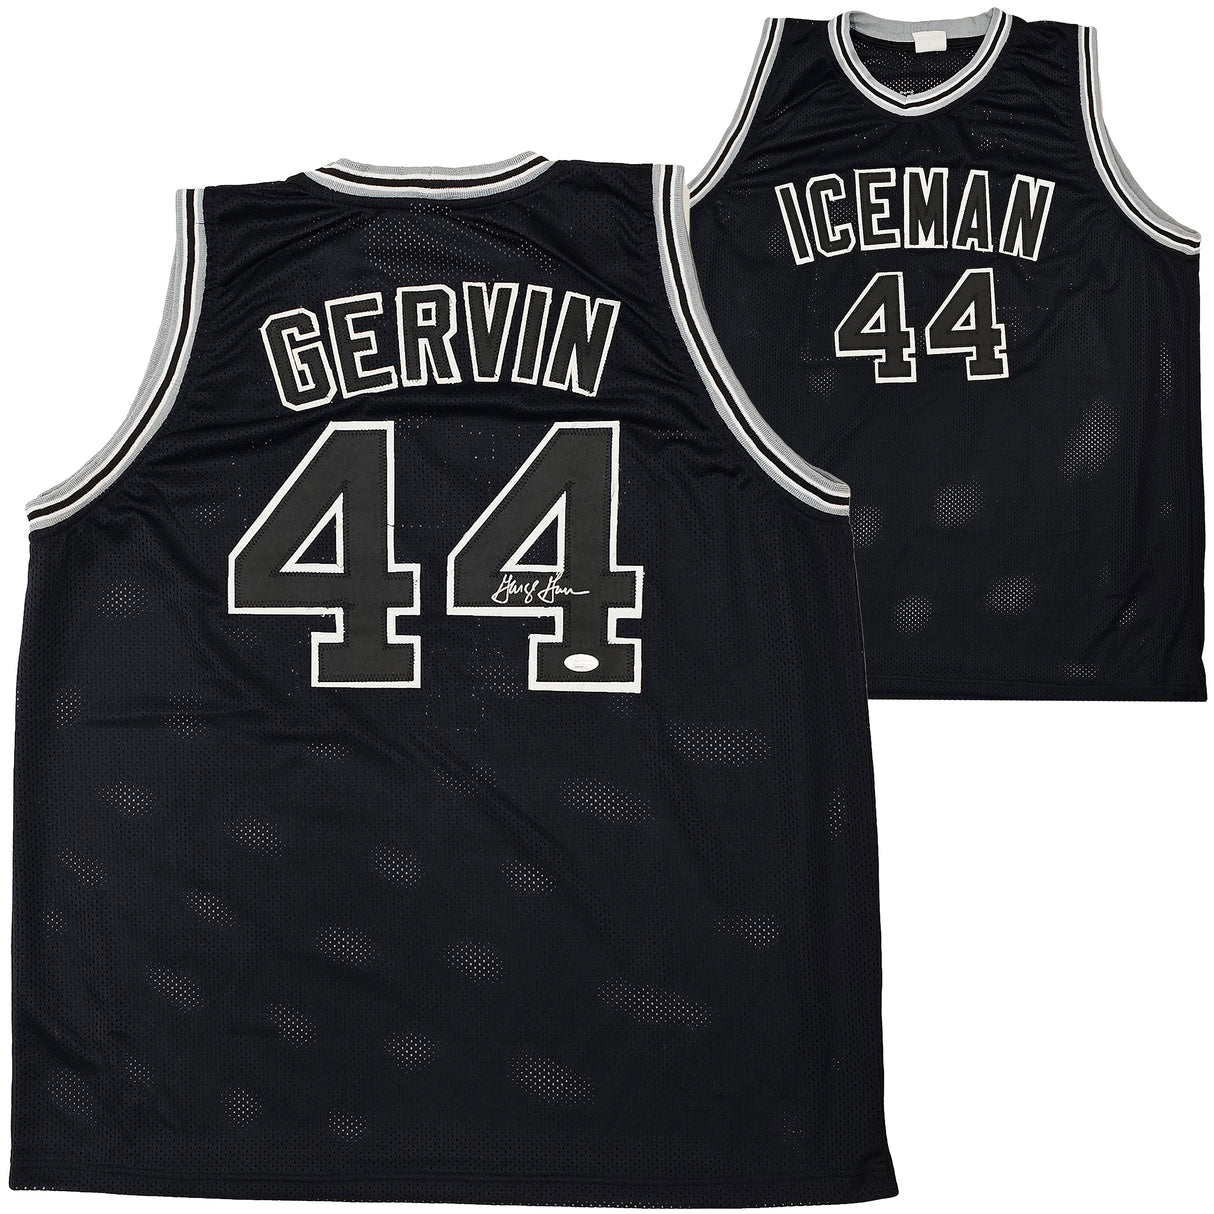 San Antonio Spurs George Gervin Autographed Black Jersey JSA Stock #215712